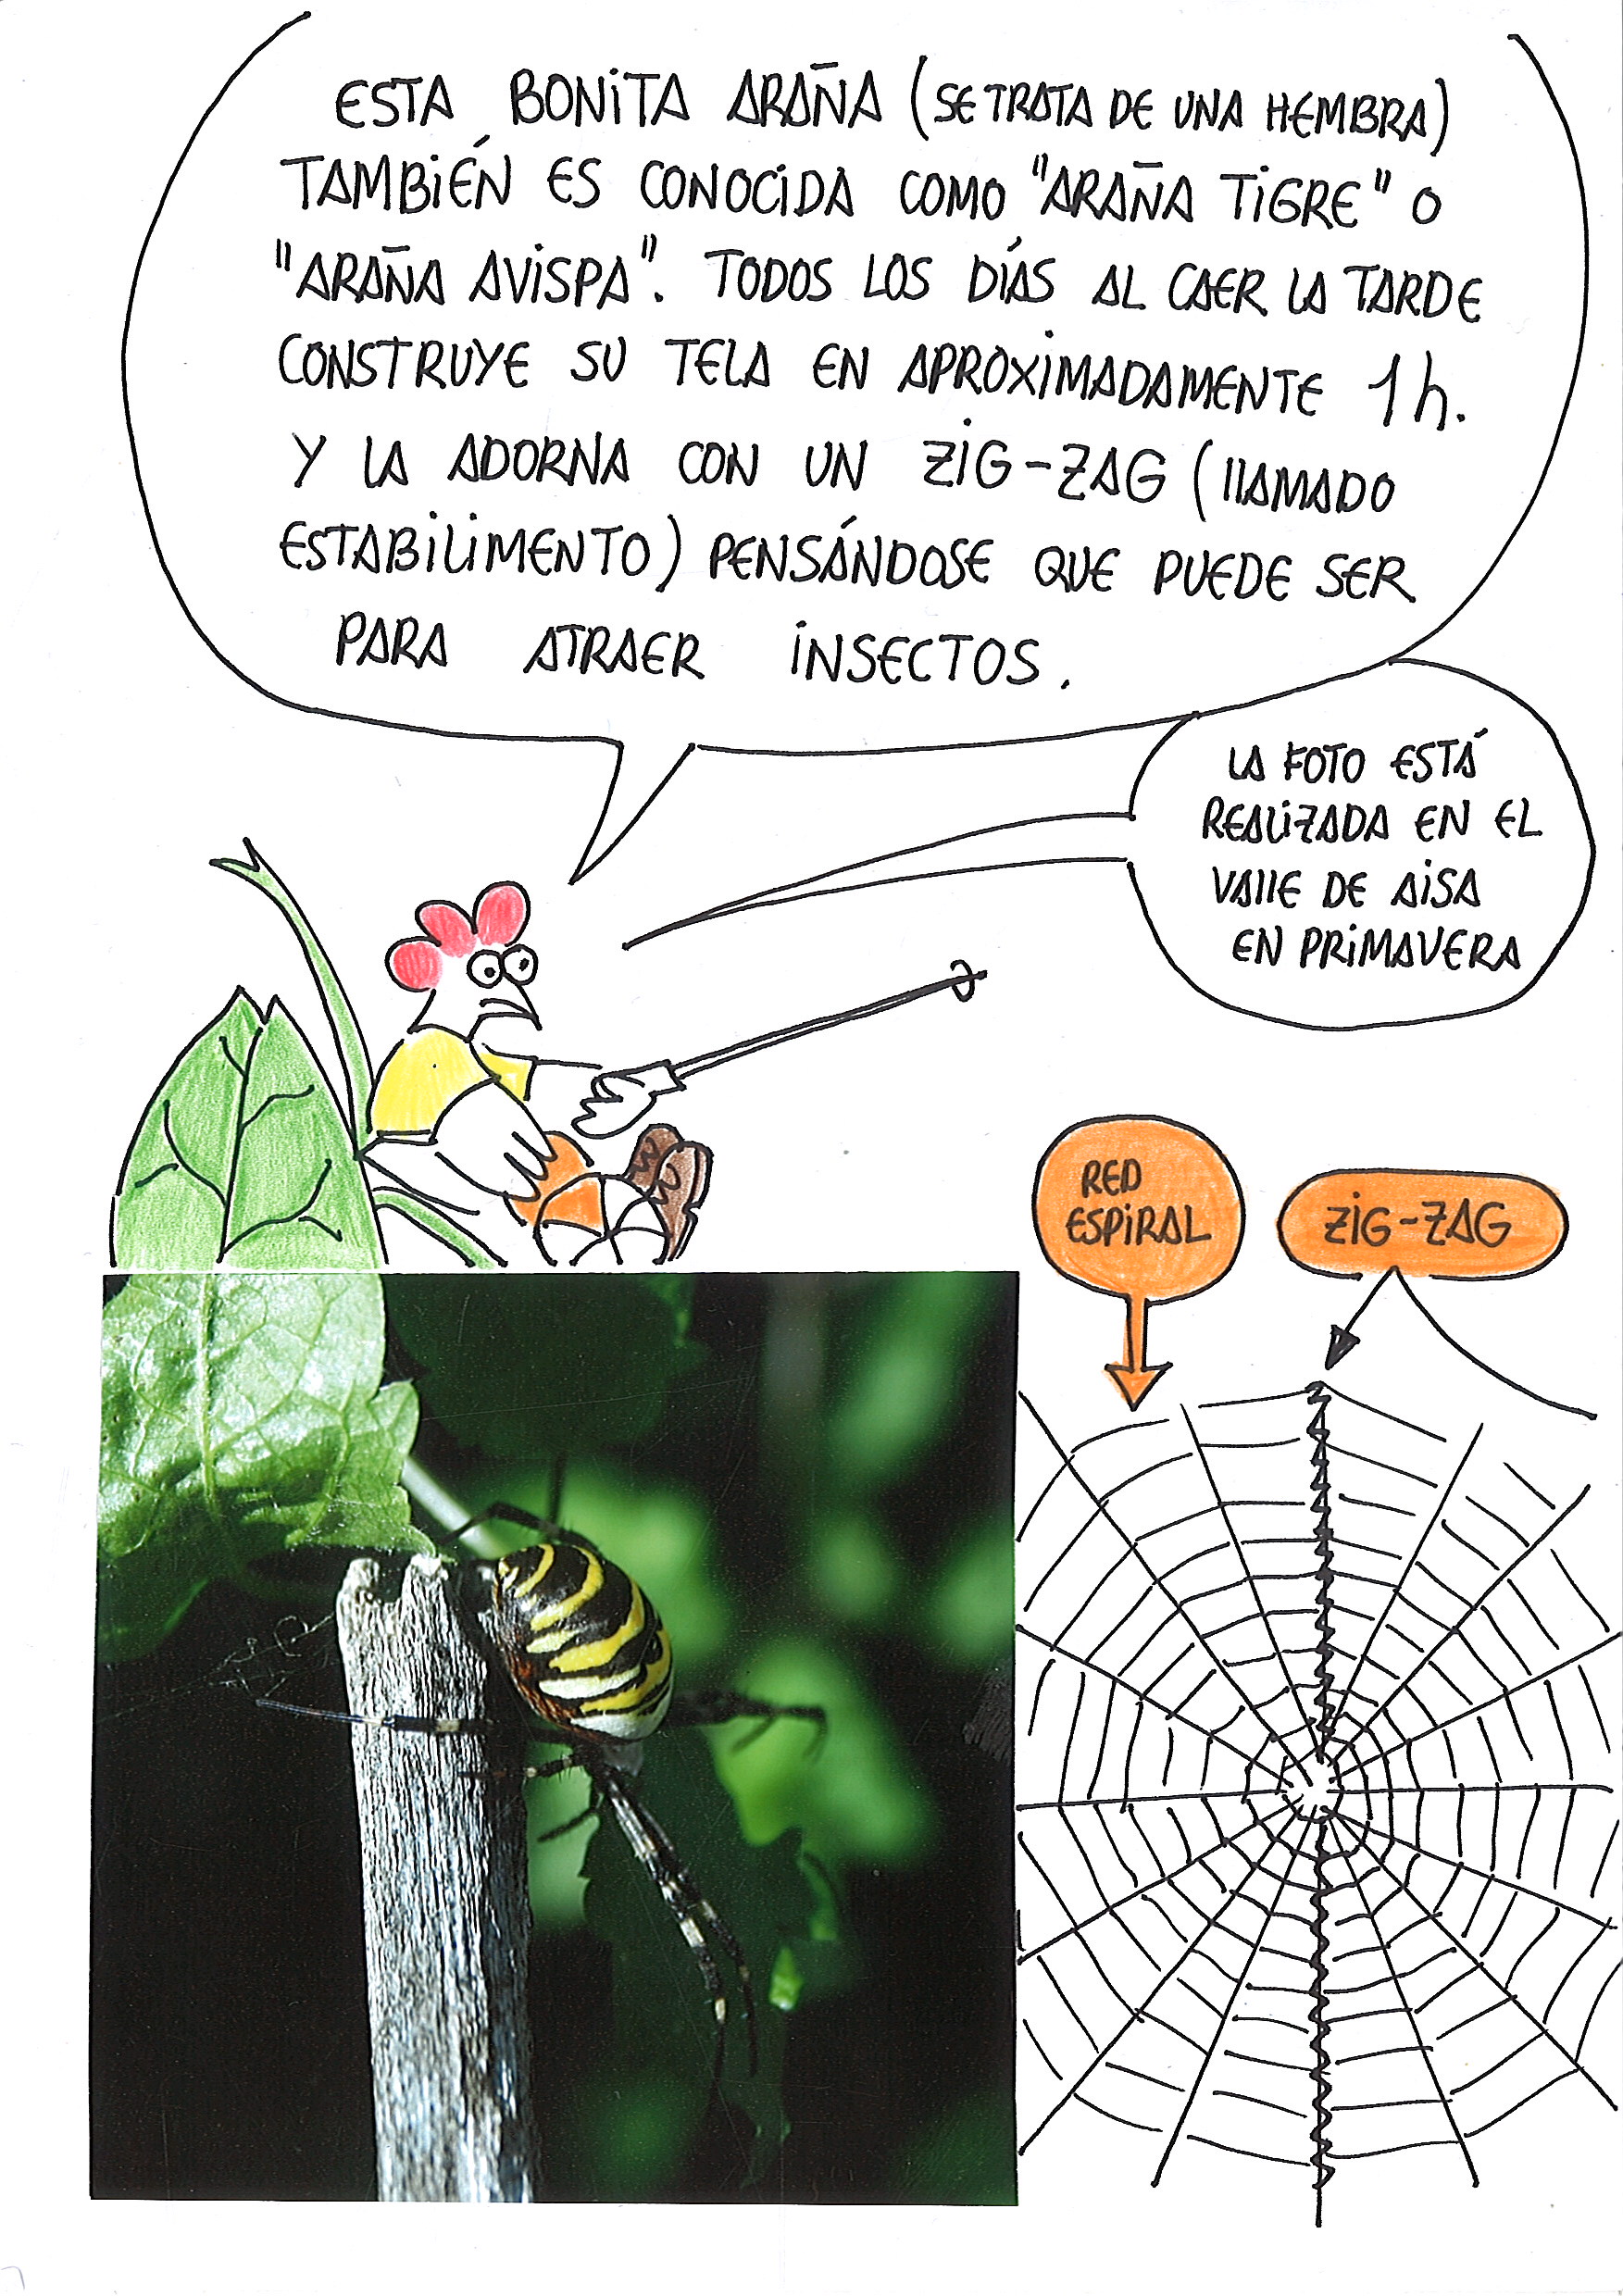 24-Araña Argiope